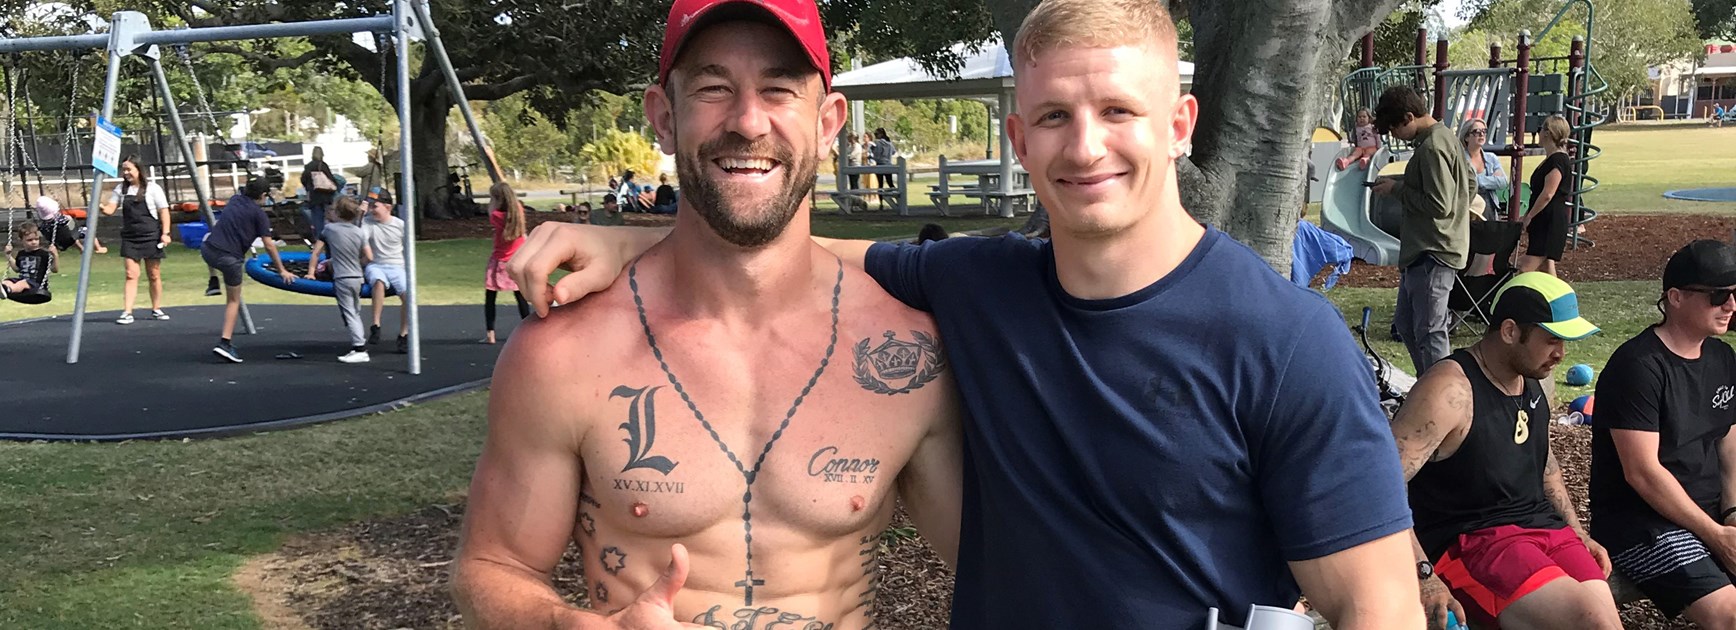 Marathon men: How Dean inspired Shea's latest challenge